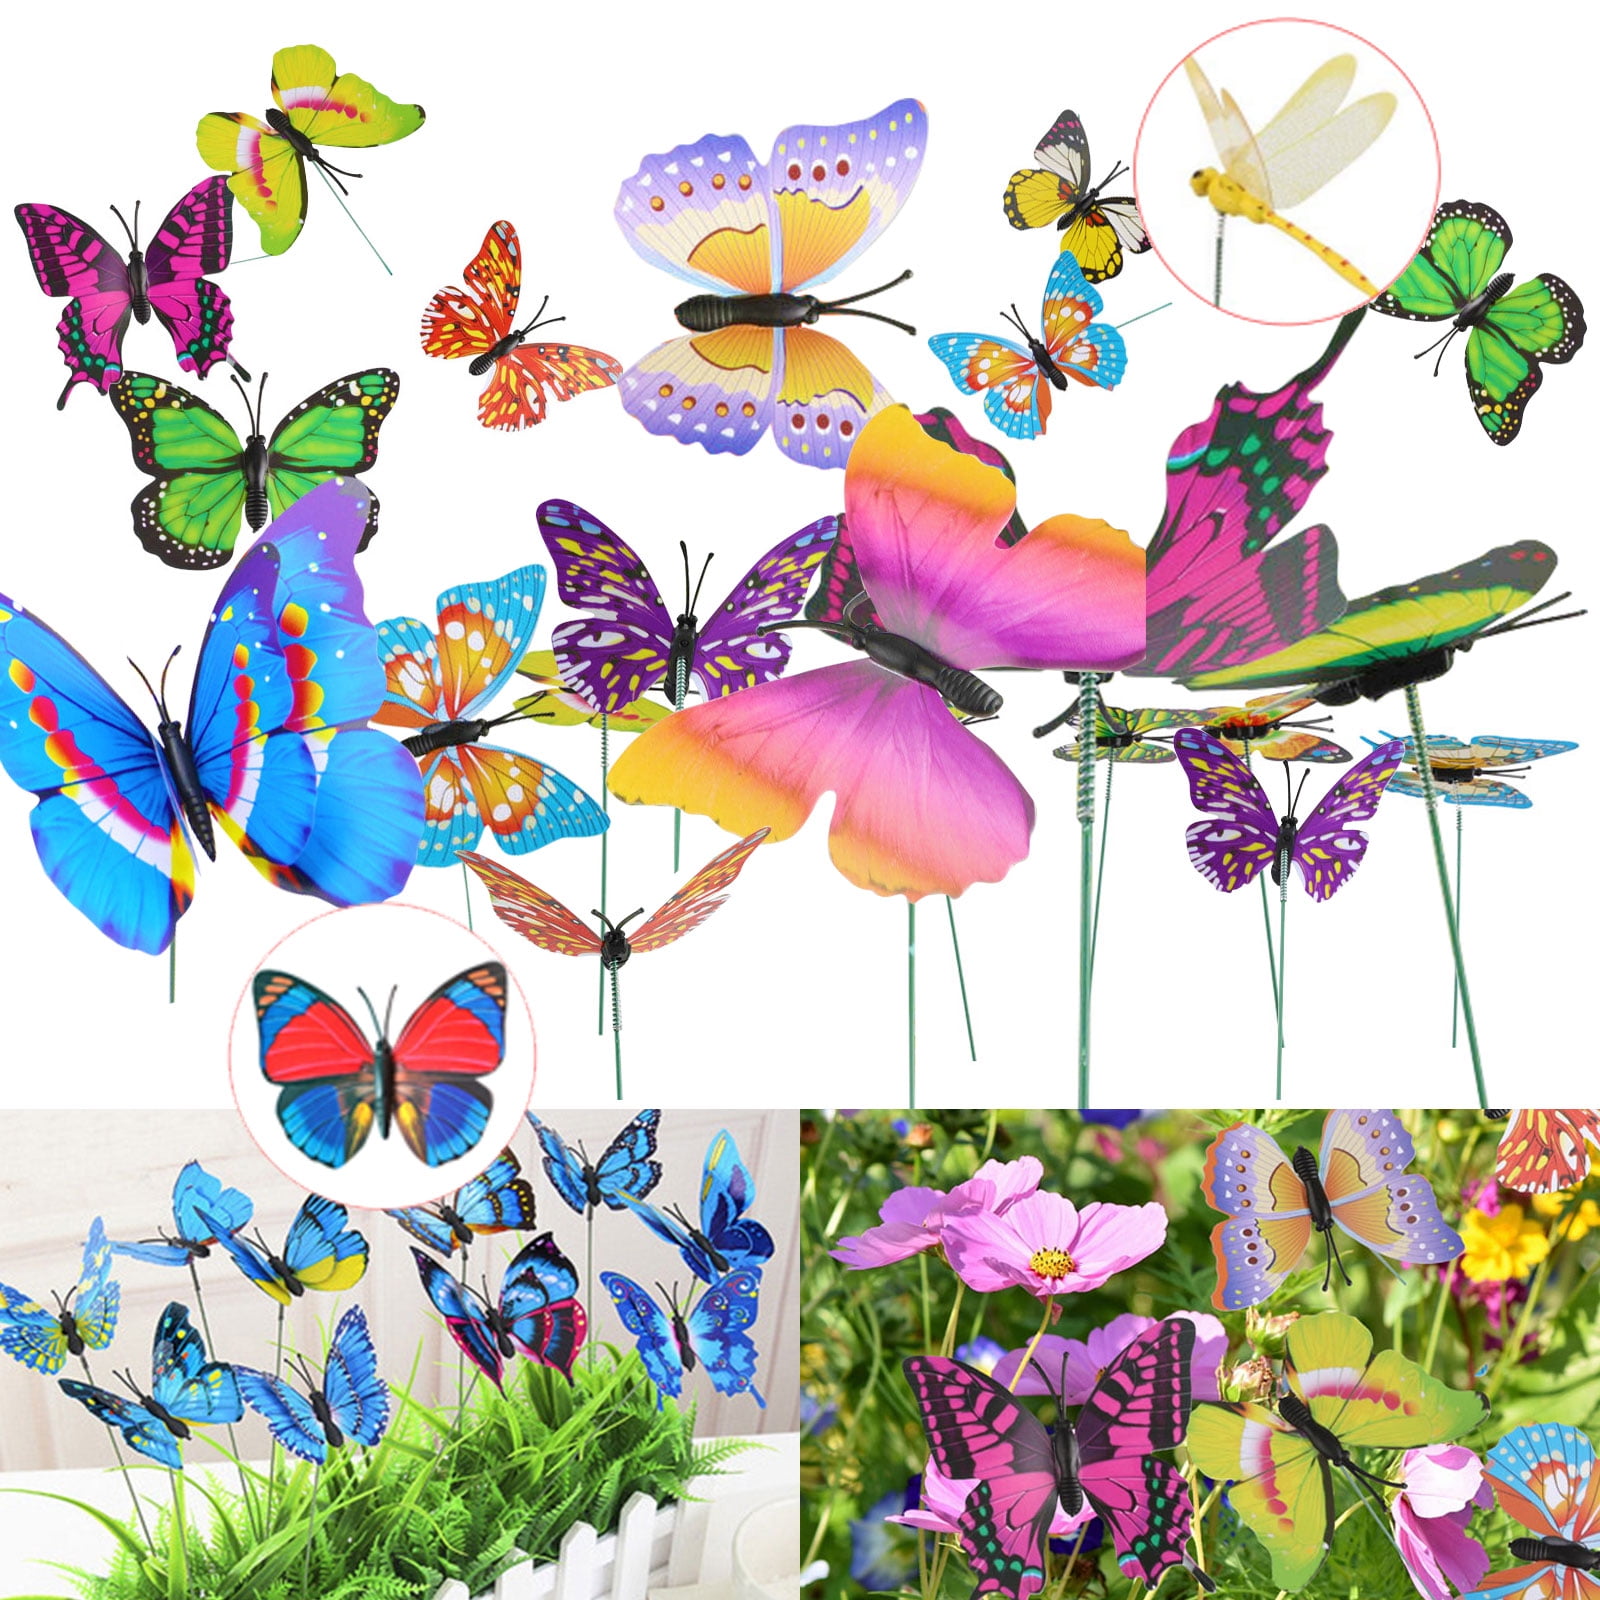 50 Pack Butterfly Dragonfly stickes Outdoor Yard Garden Flower Pot Decoration 